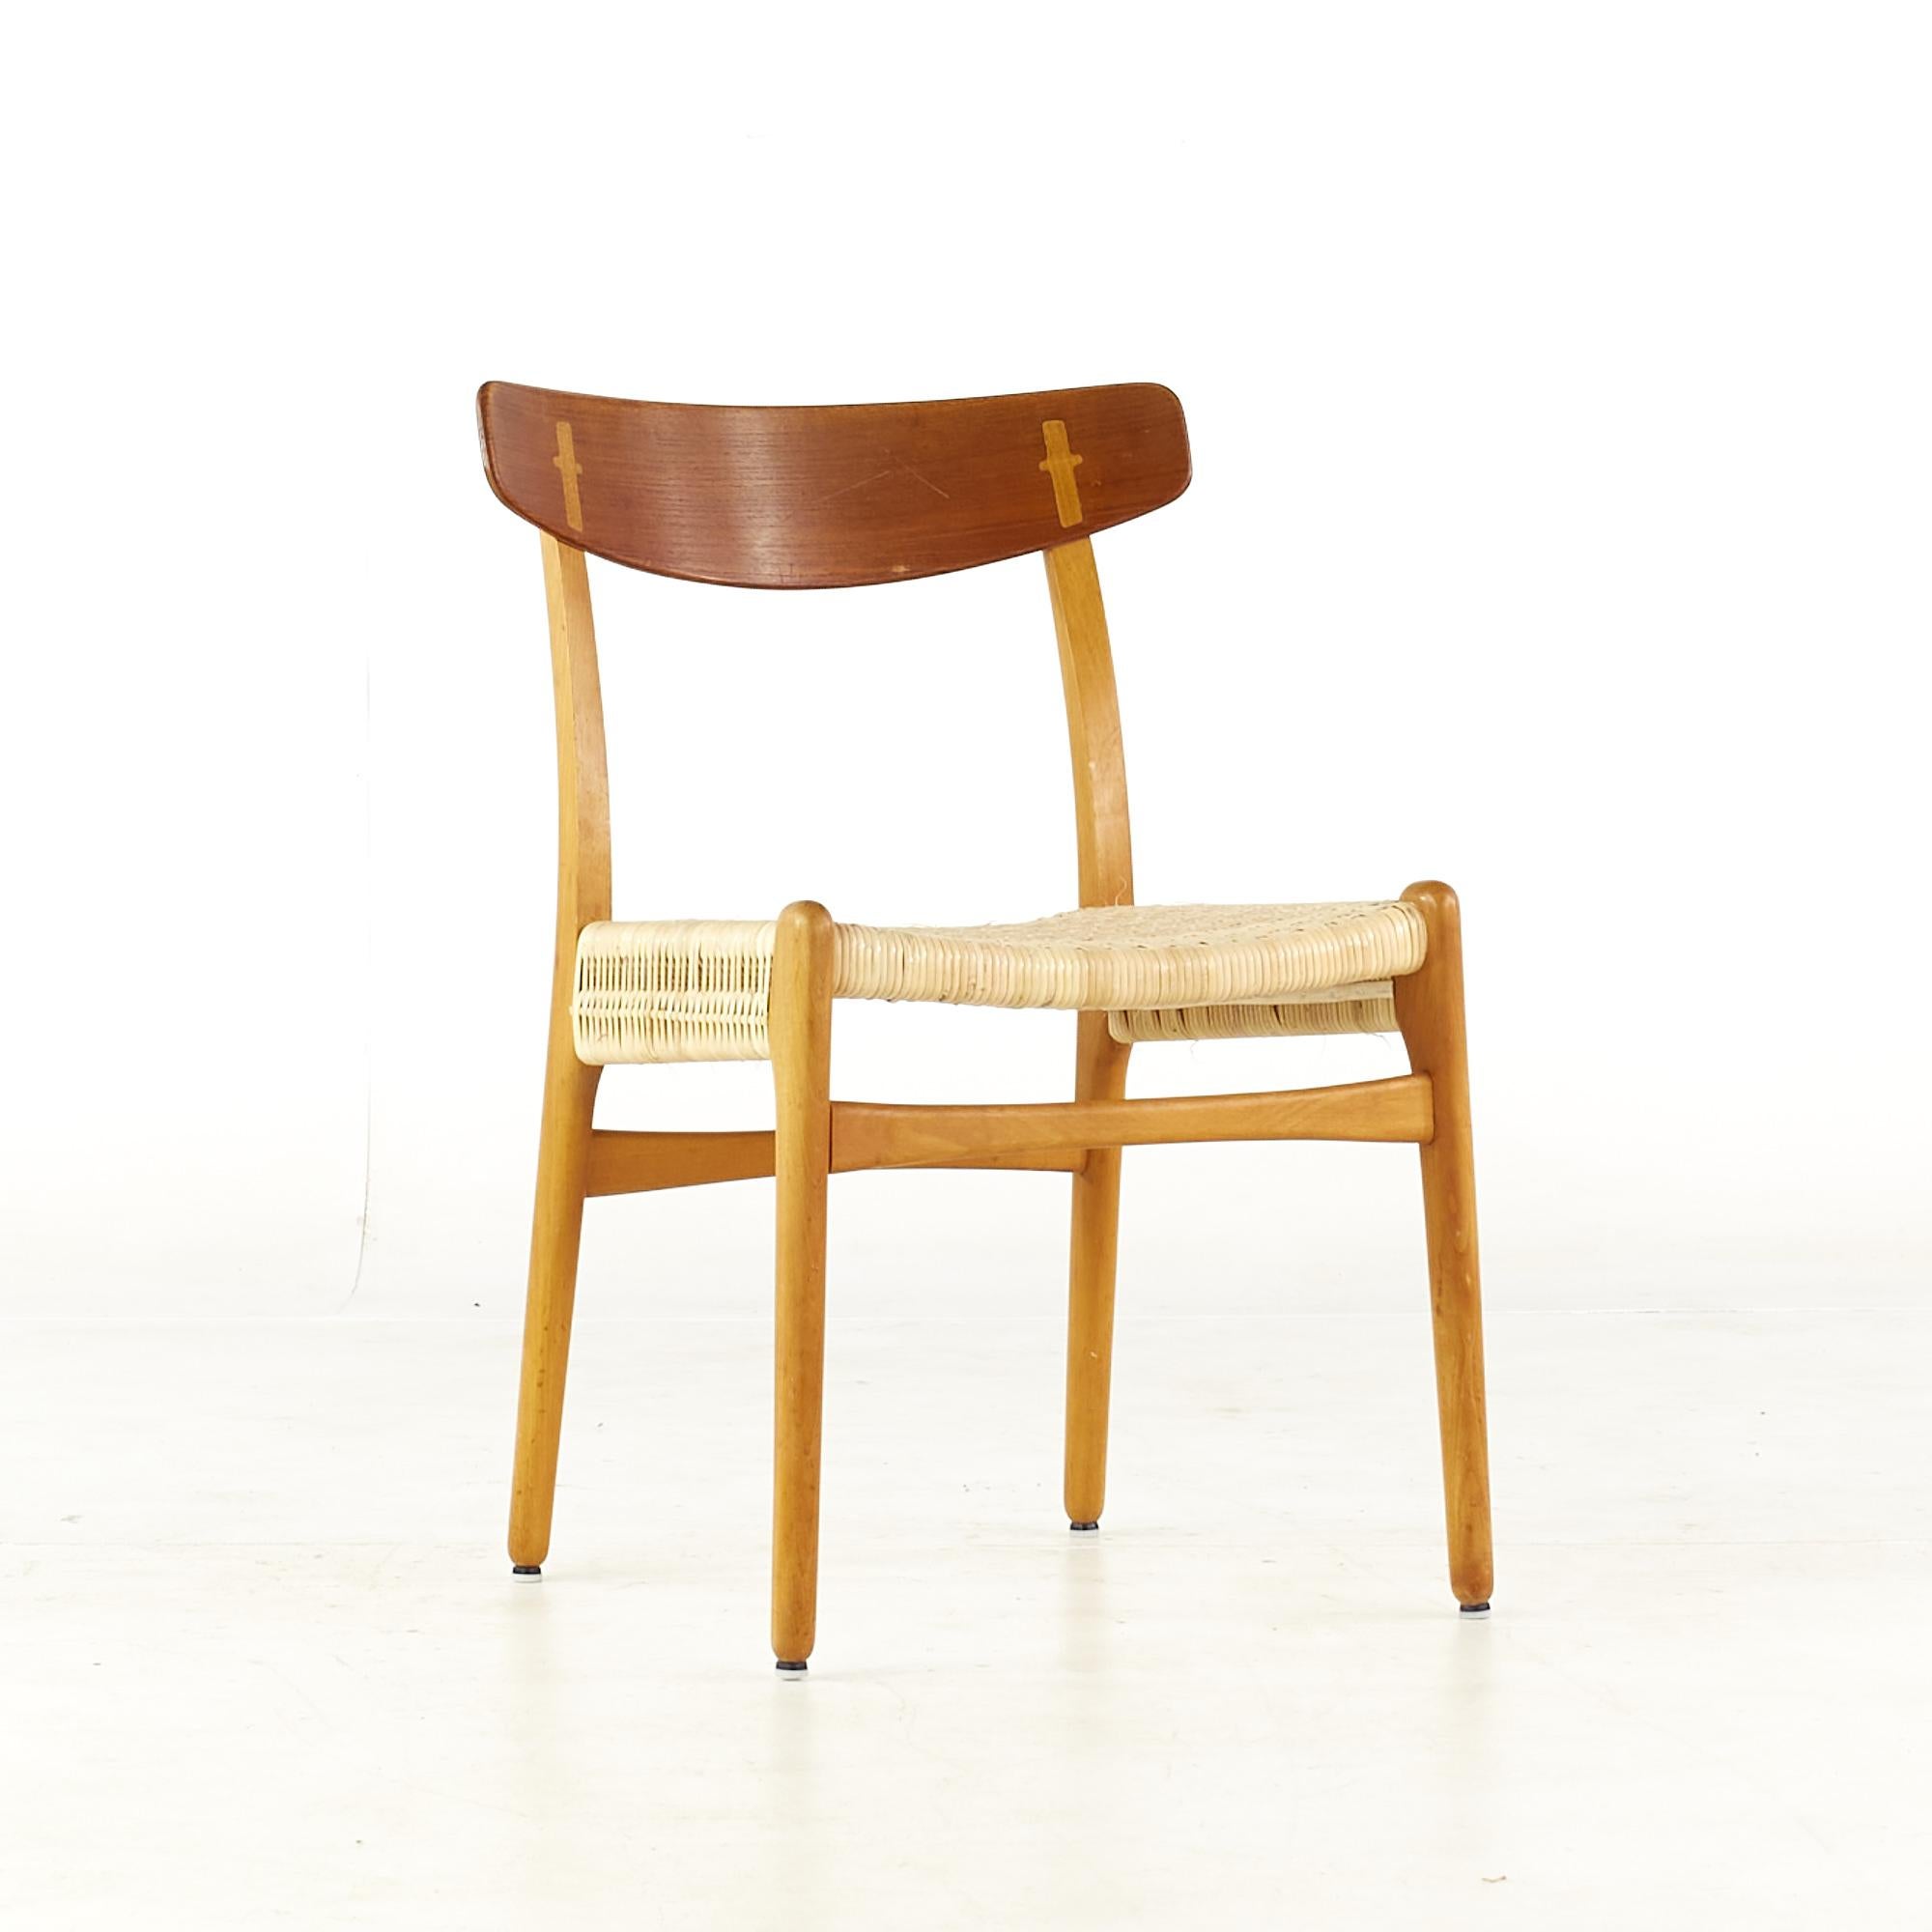 Danish Hans Wegner for Carl Hansen and Son Midcentury Teak CH23 Dining Chairs, Pair For Sale